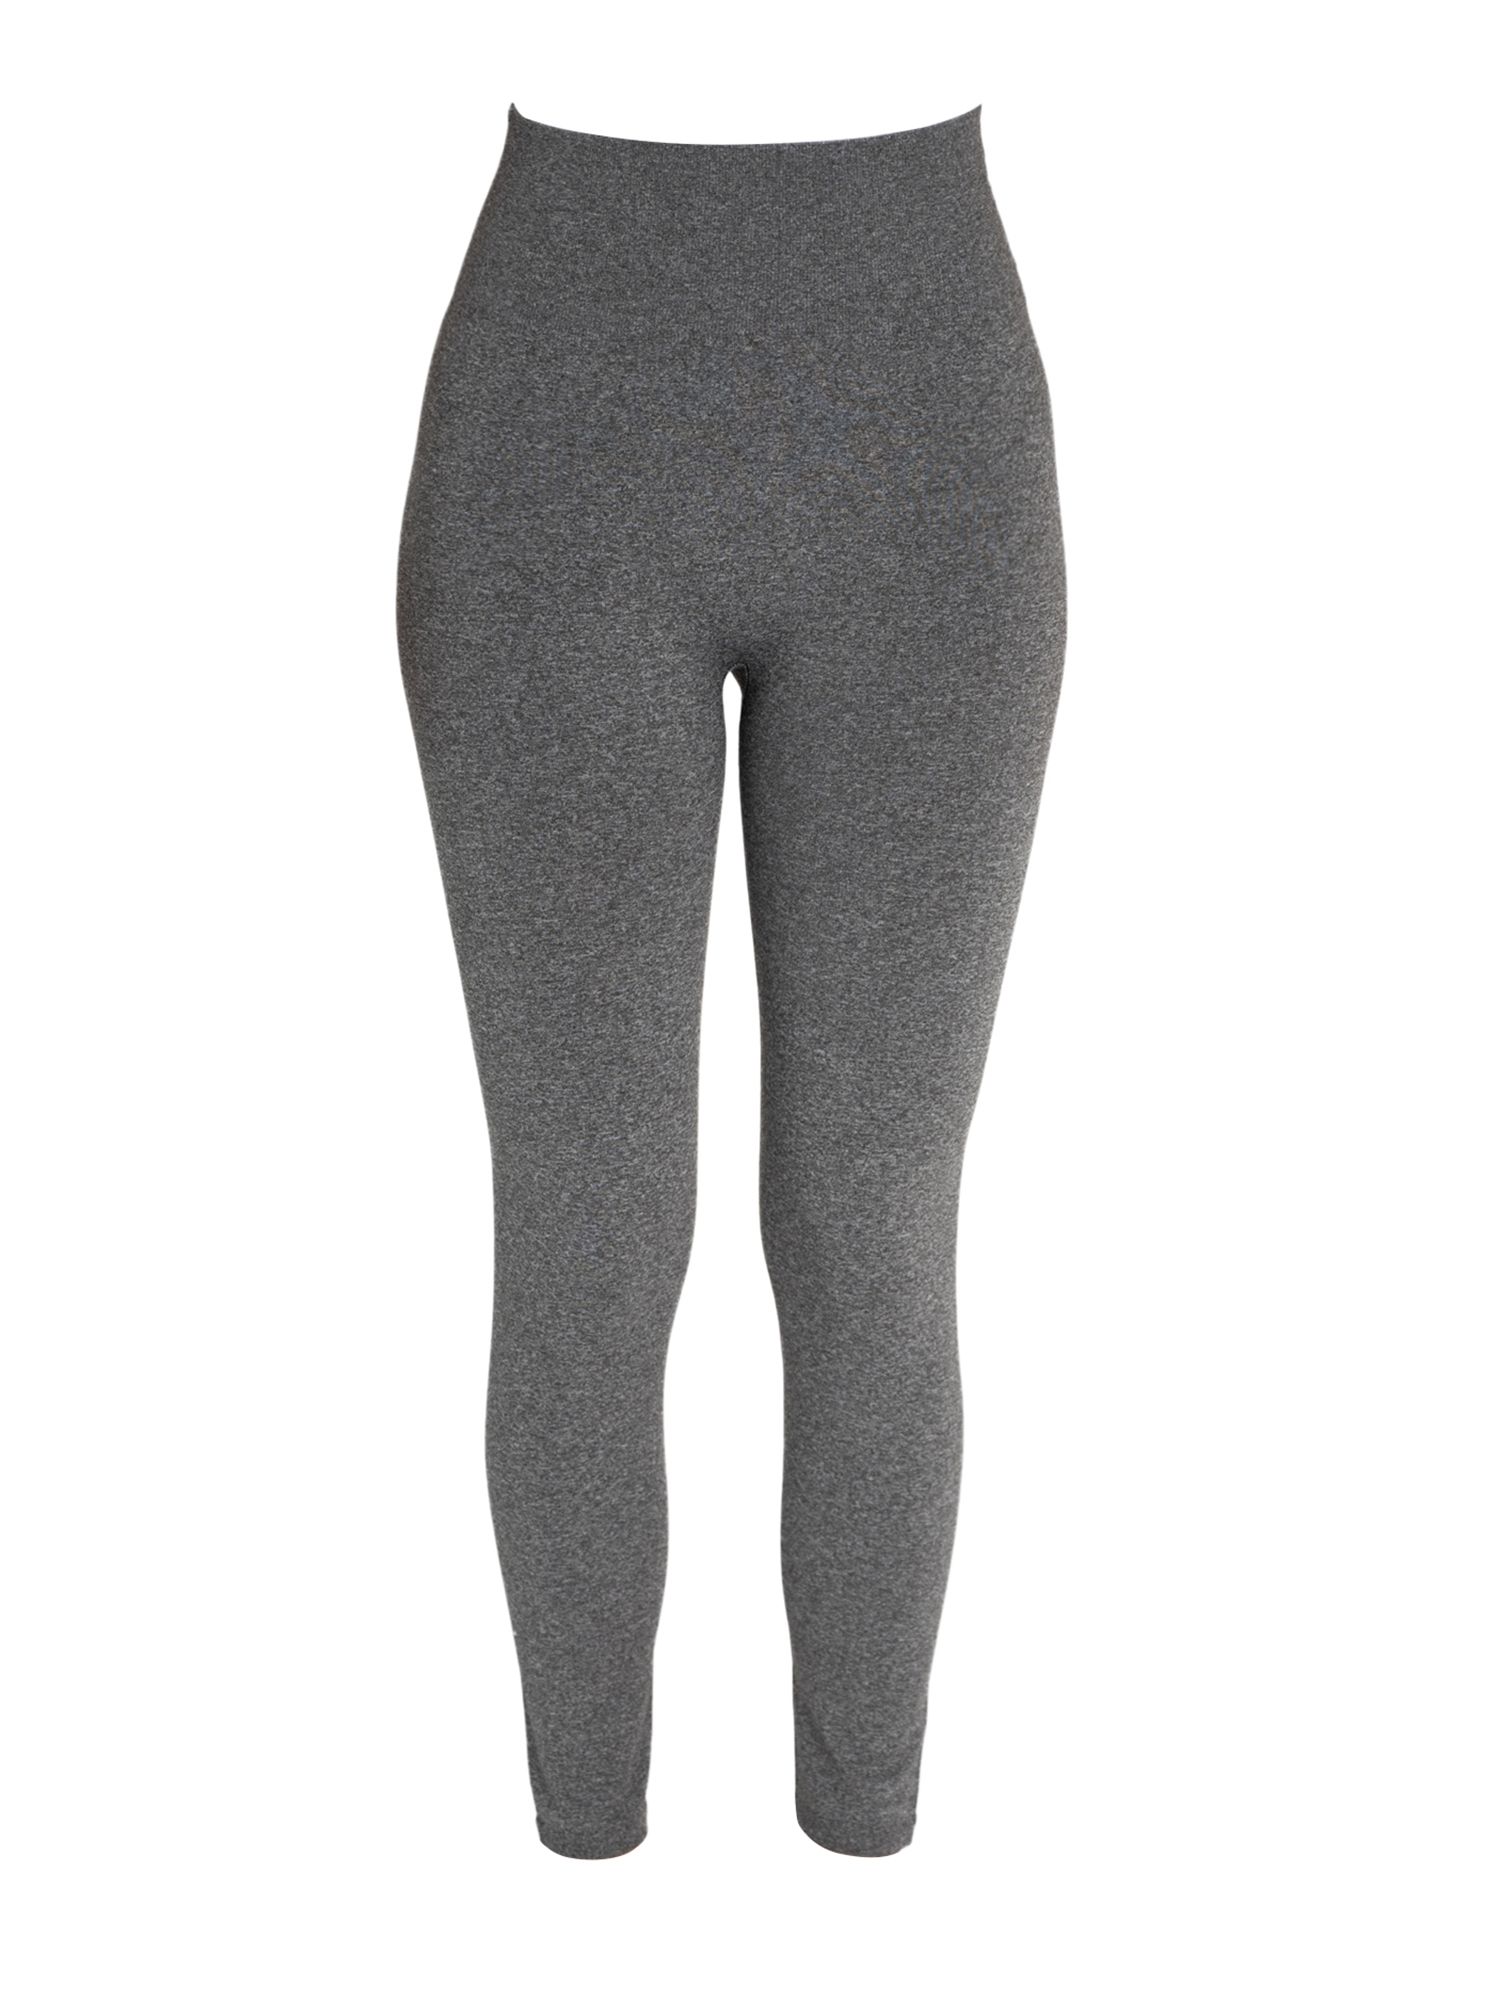 MukLuks Women's Ankle Length Fleece Lined Legging, Charcoal Heather, 1-Pack | Walmart (US)